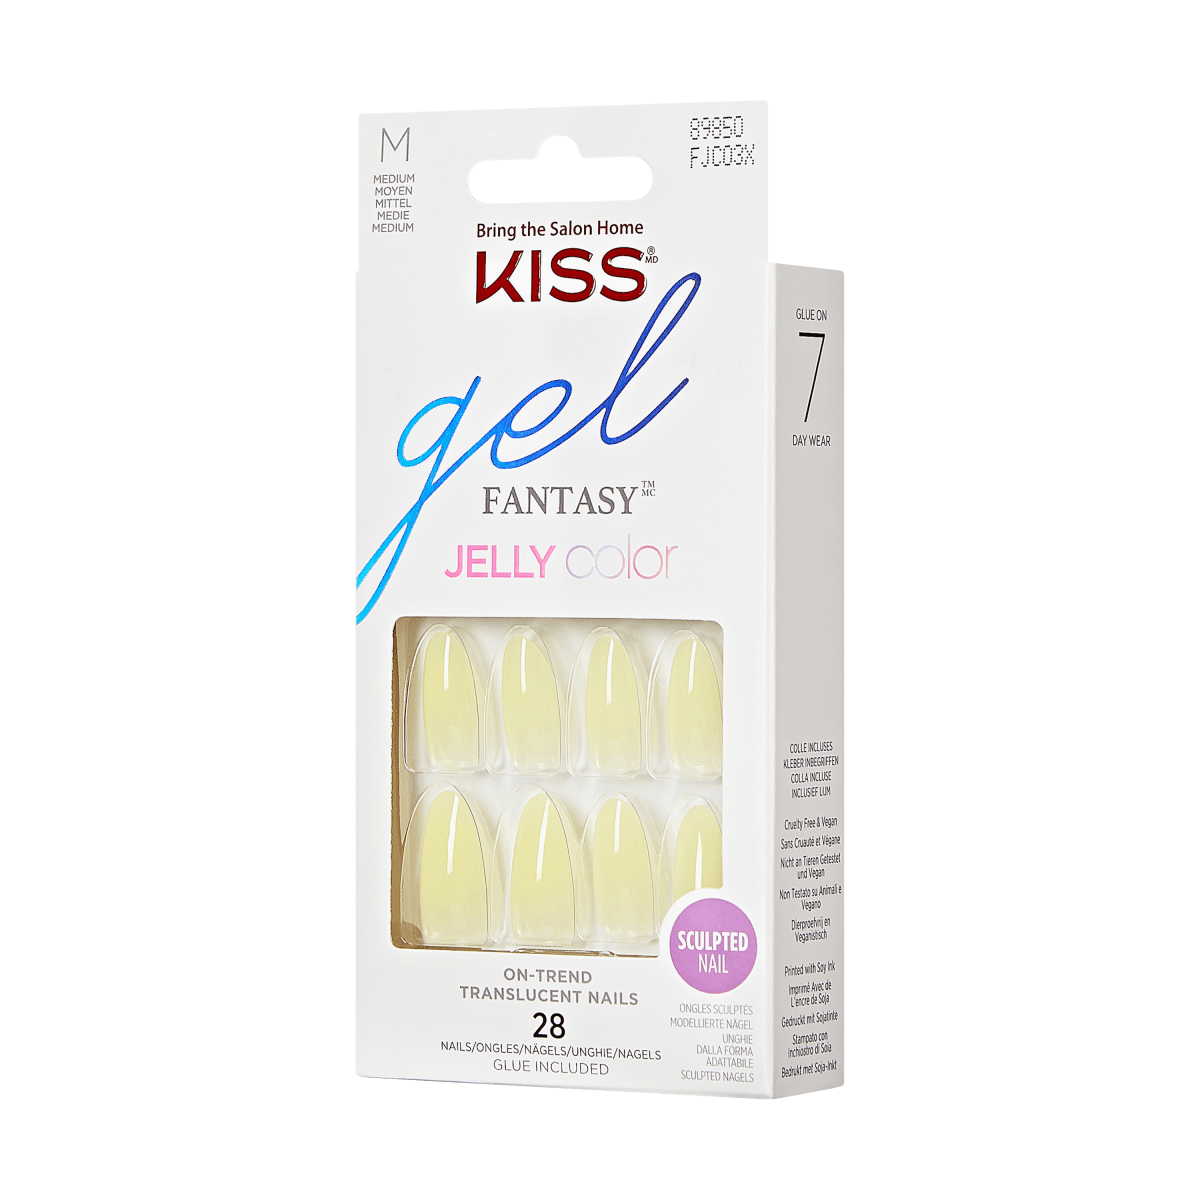 KISS Gel Fantasy Jelly Color Nails - Rainbow Jelly